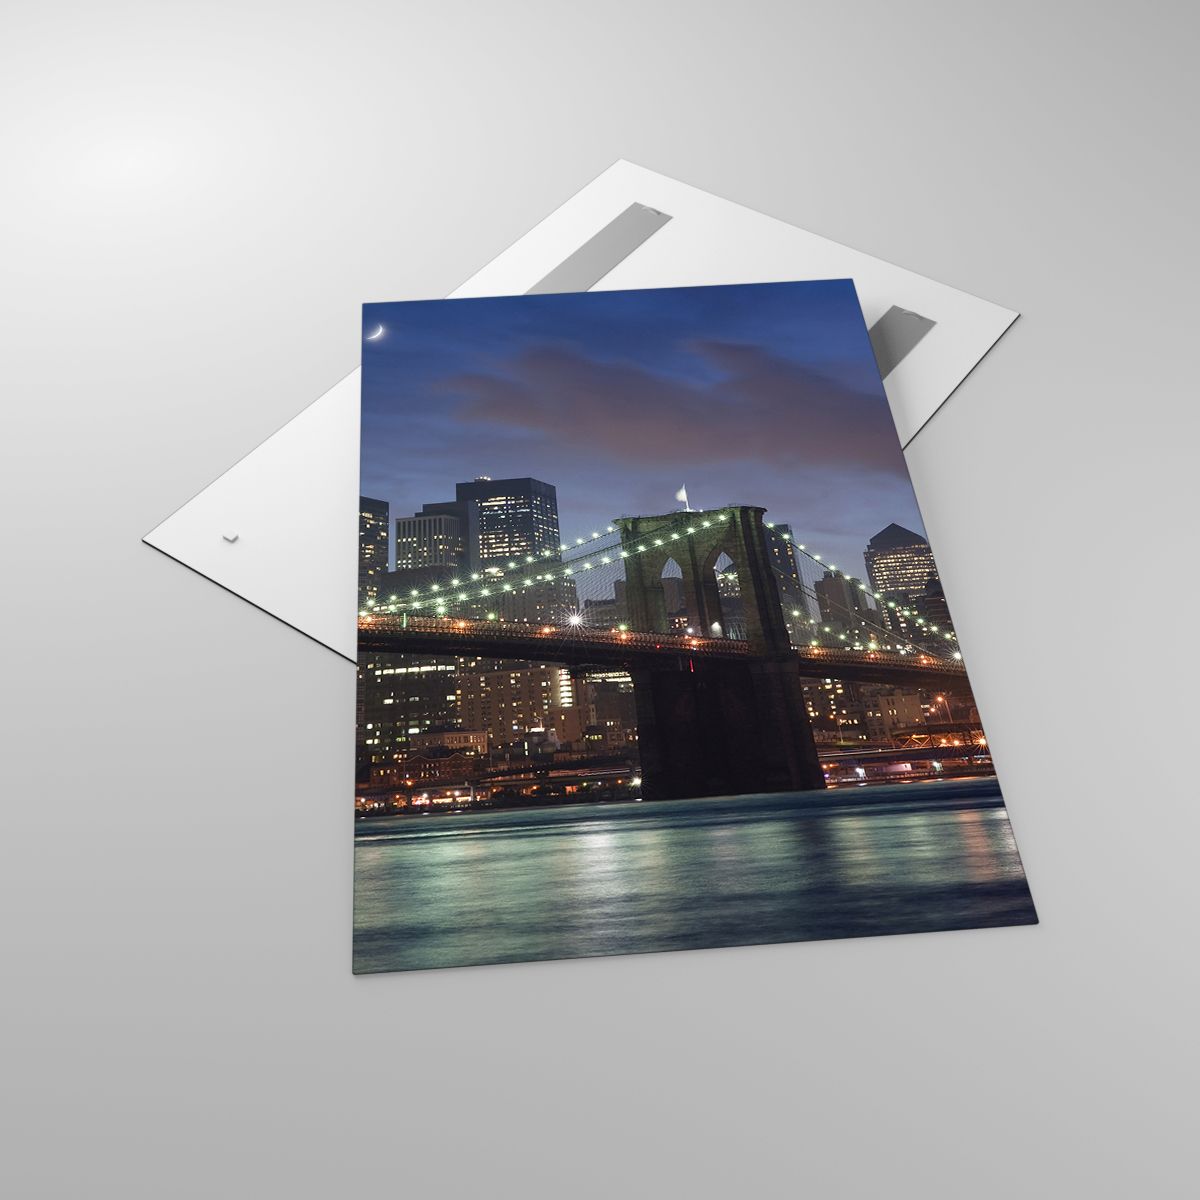 Glasbild Stadt, Glasbild New York, Glasbild Brooklyn Brücke, Glasbild Manhattan, Glasbild Usa